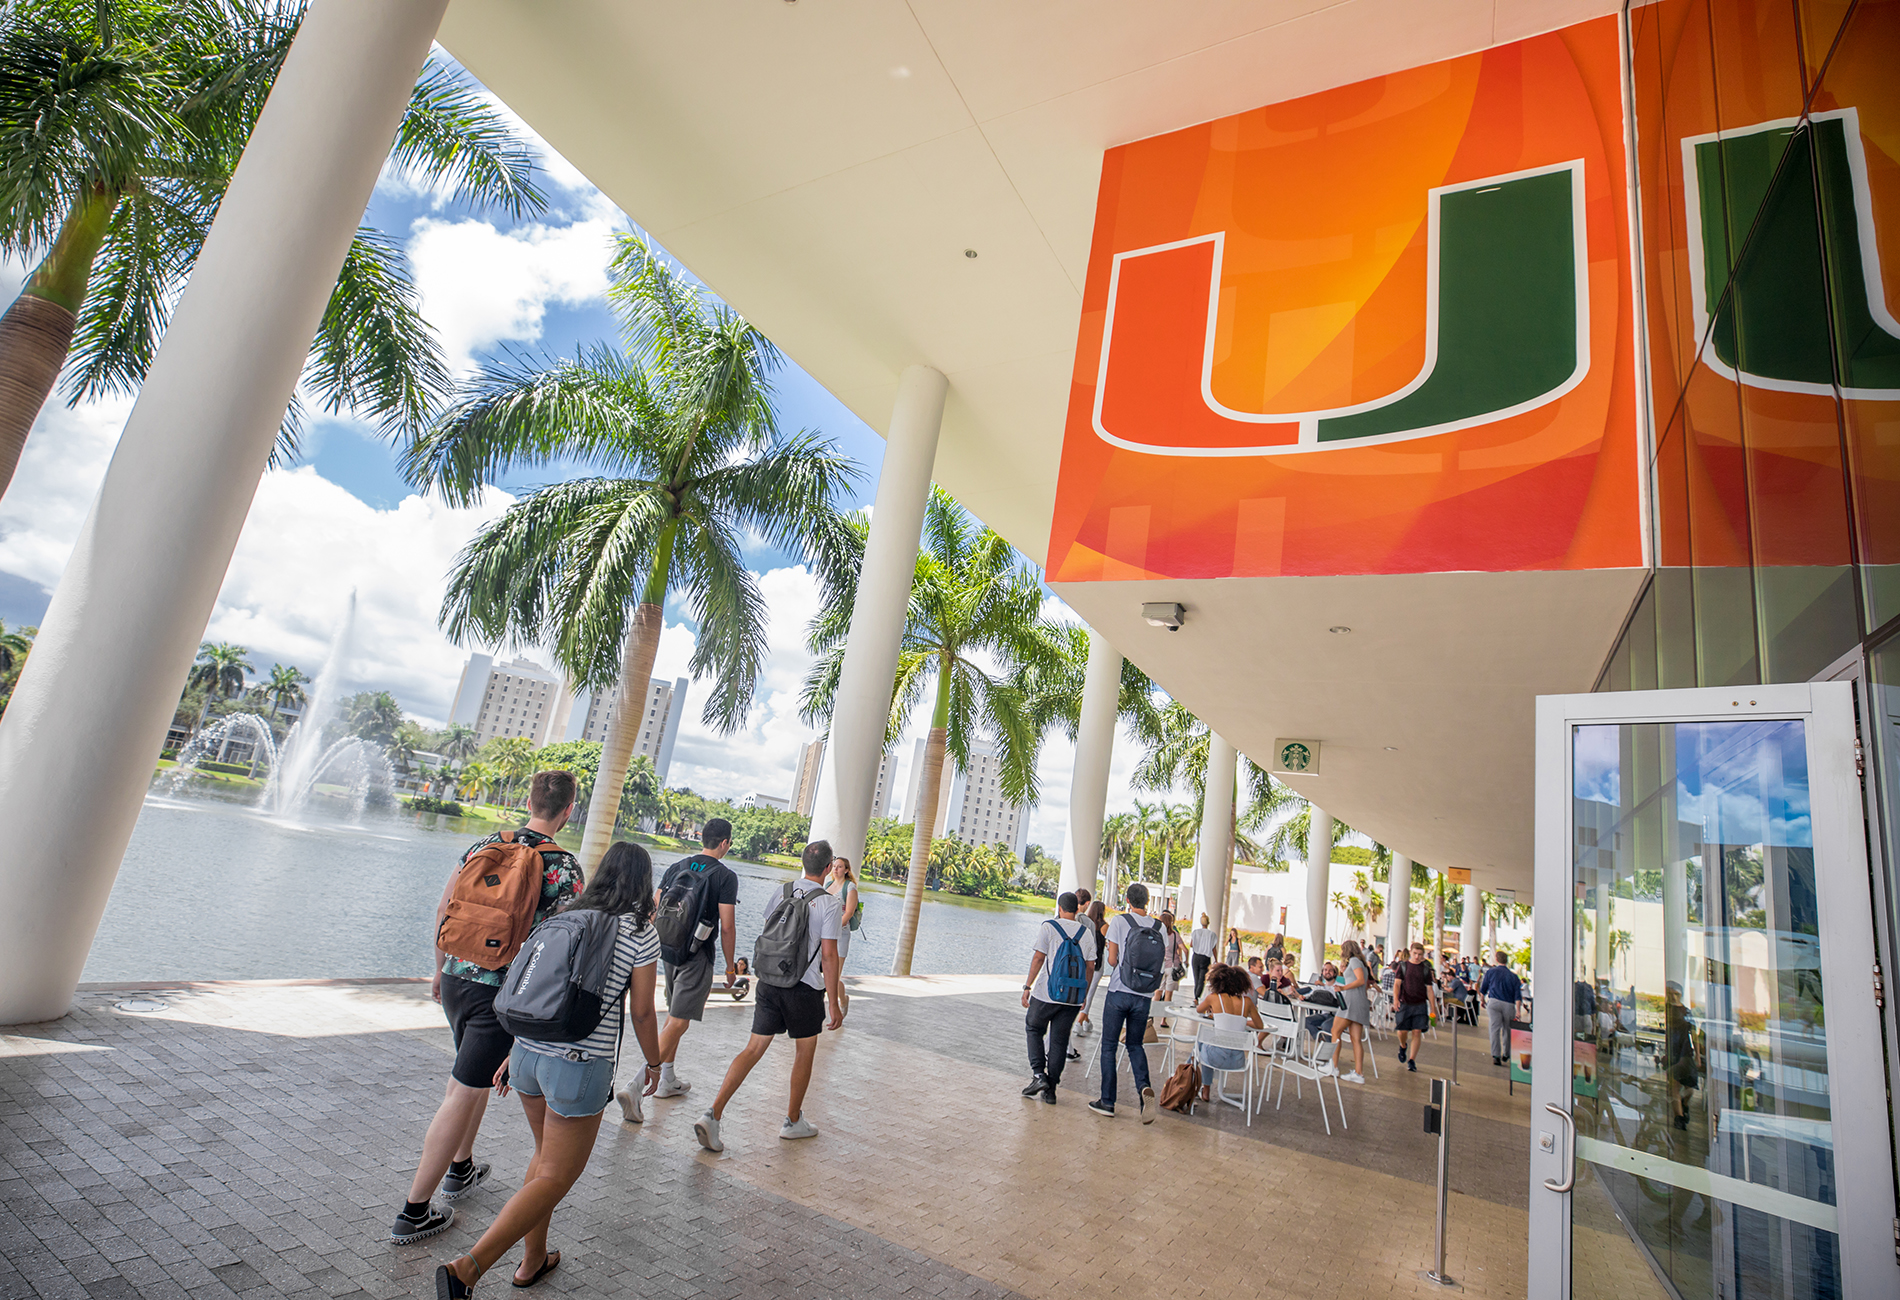 Students walking through the University of Miami student center.